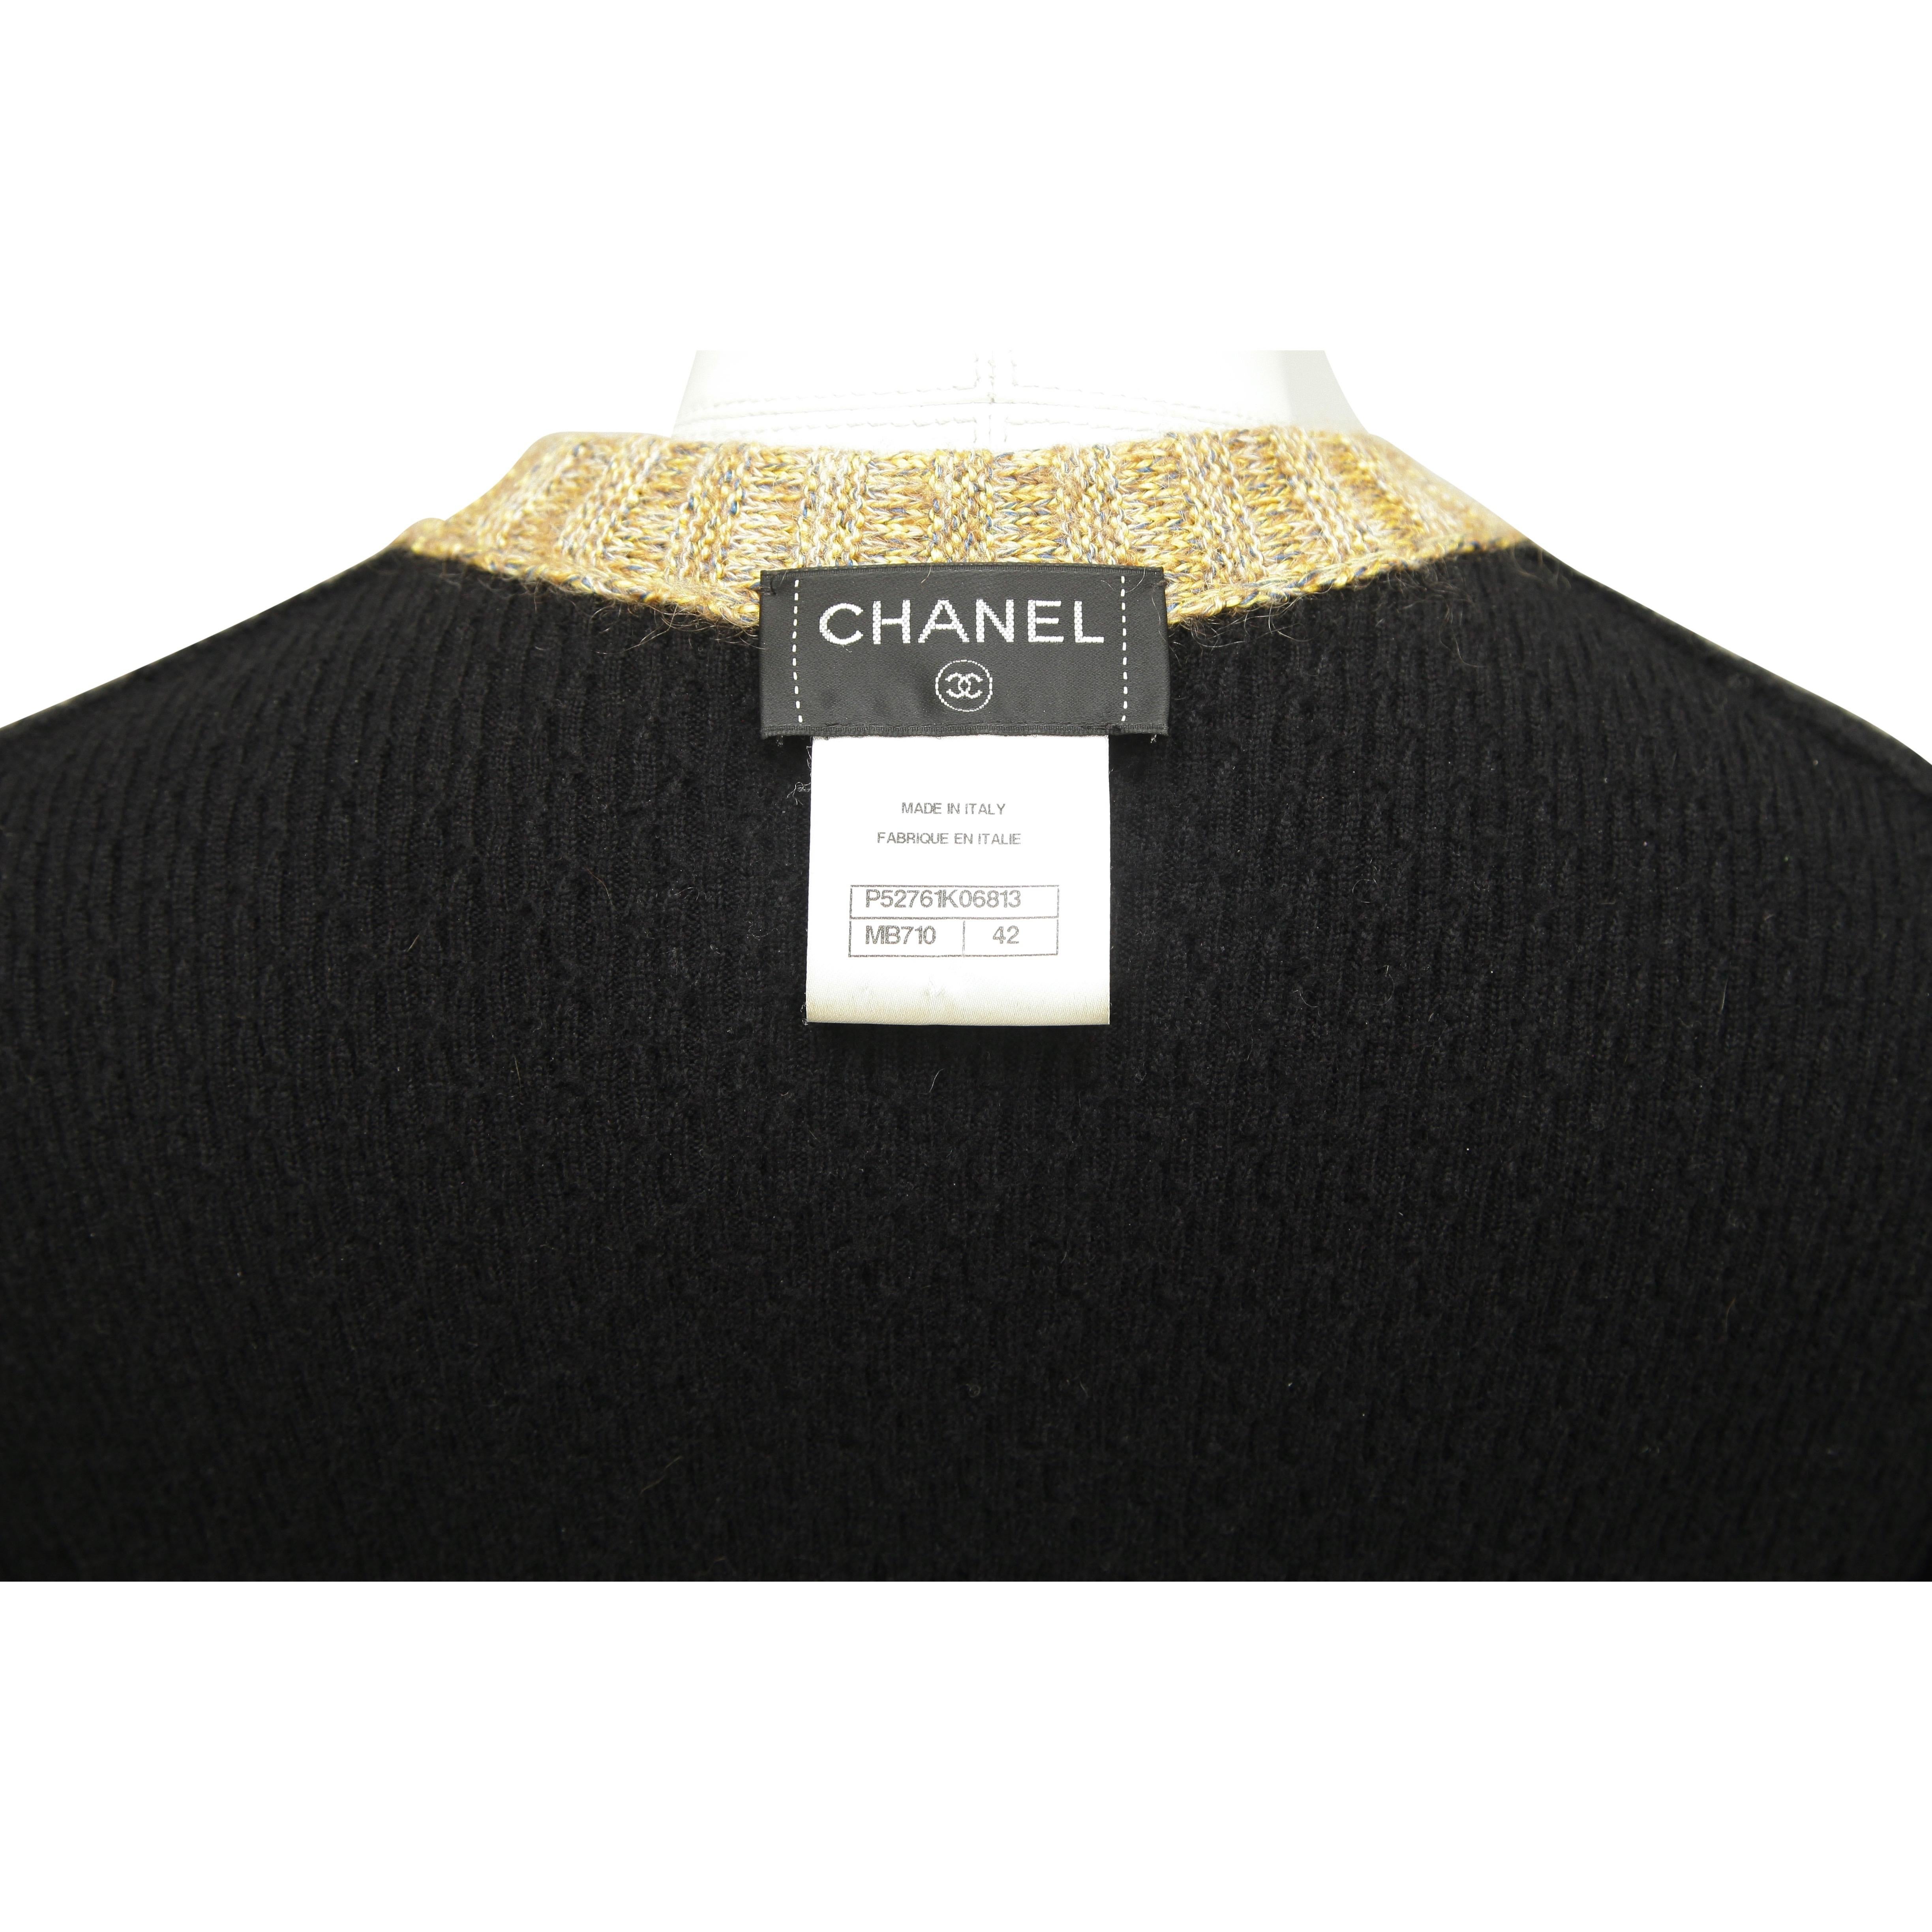 CHANEL Dress Knit Sweater Black Gold Camellia Long Sleeve Cashmere Sz 42 2015 6